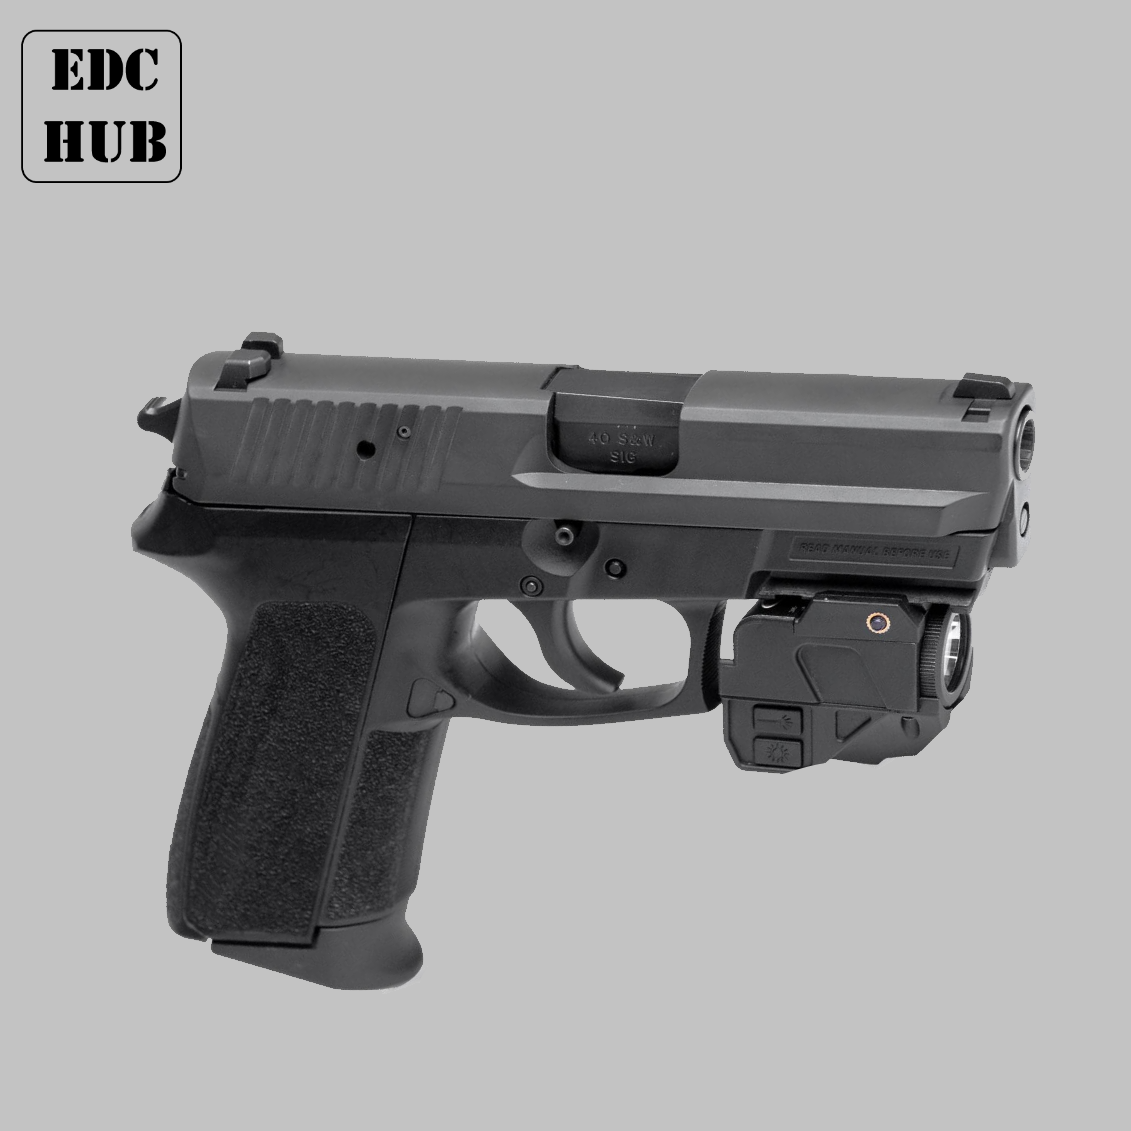 Tacticon Firefly V2 pistol light for compact handguns